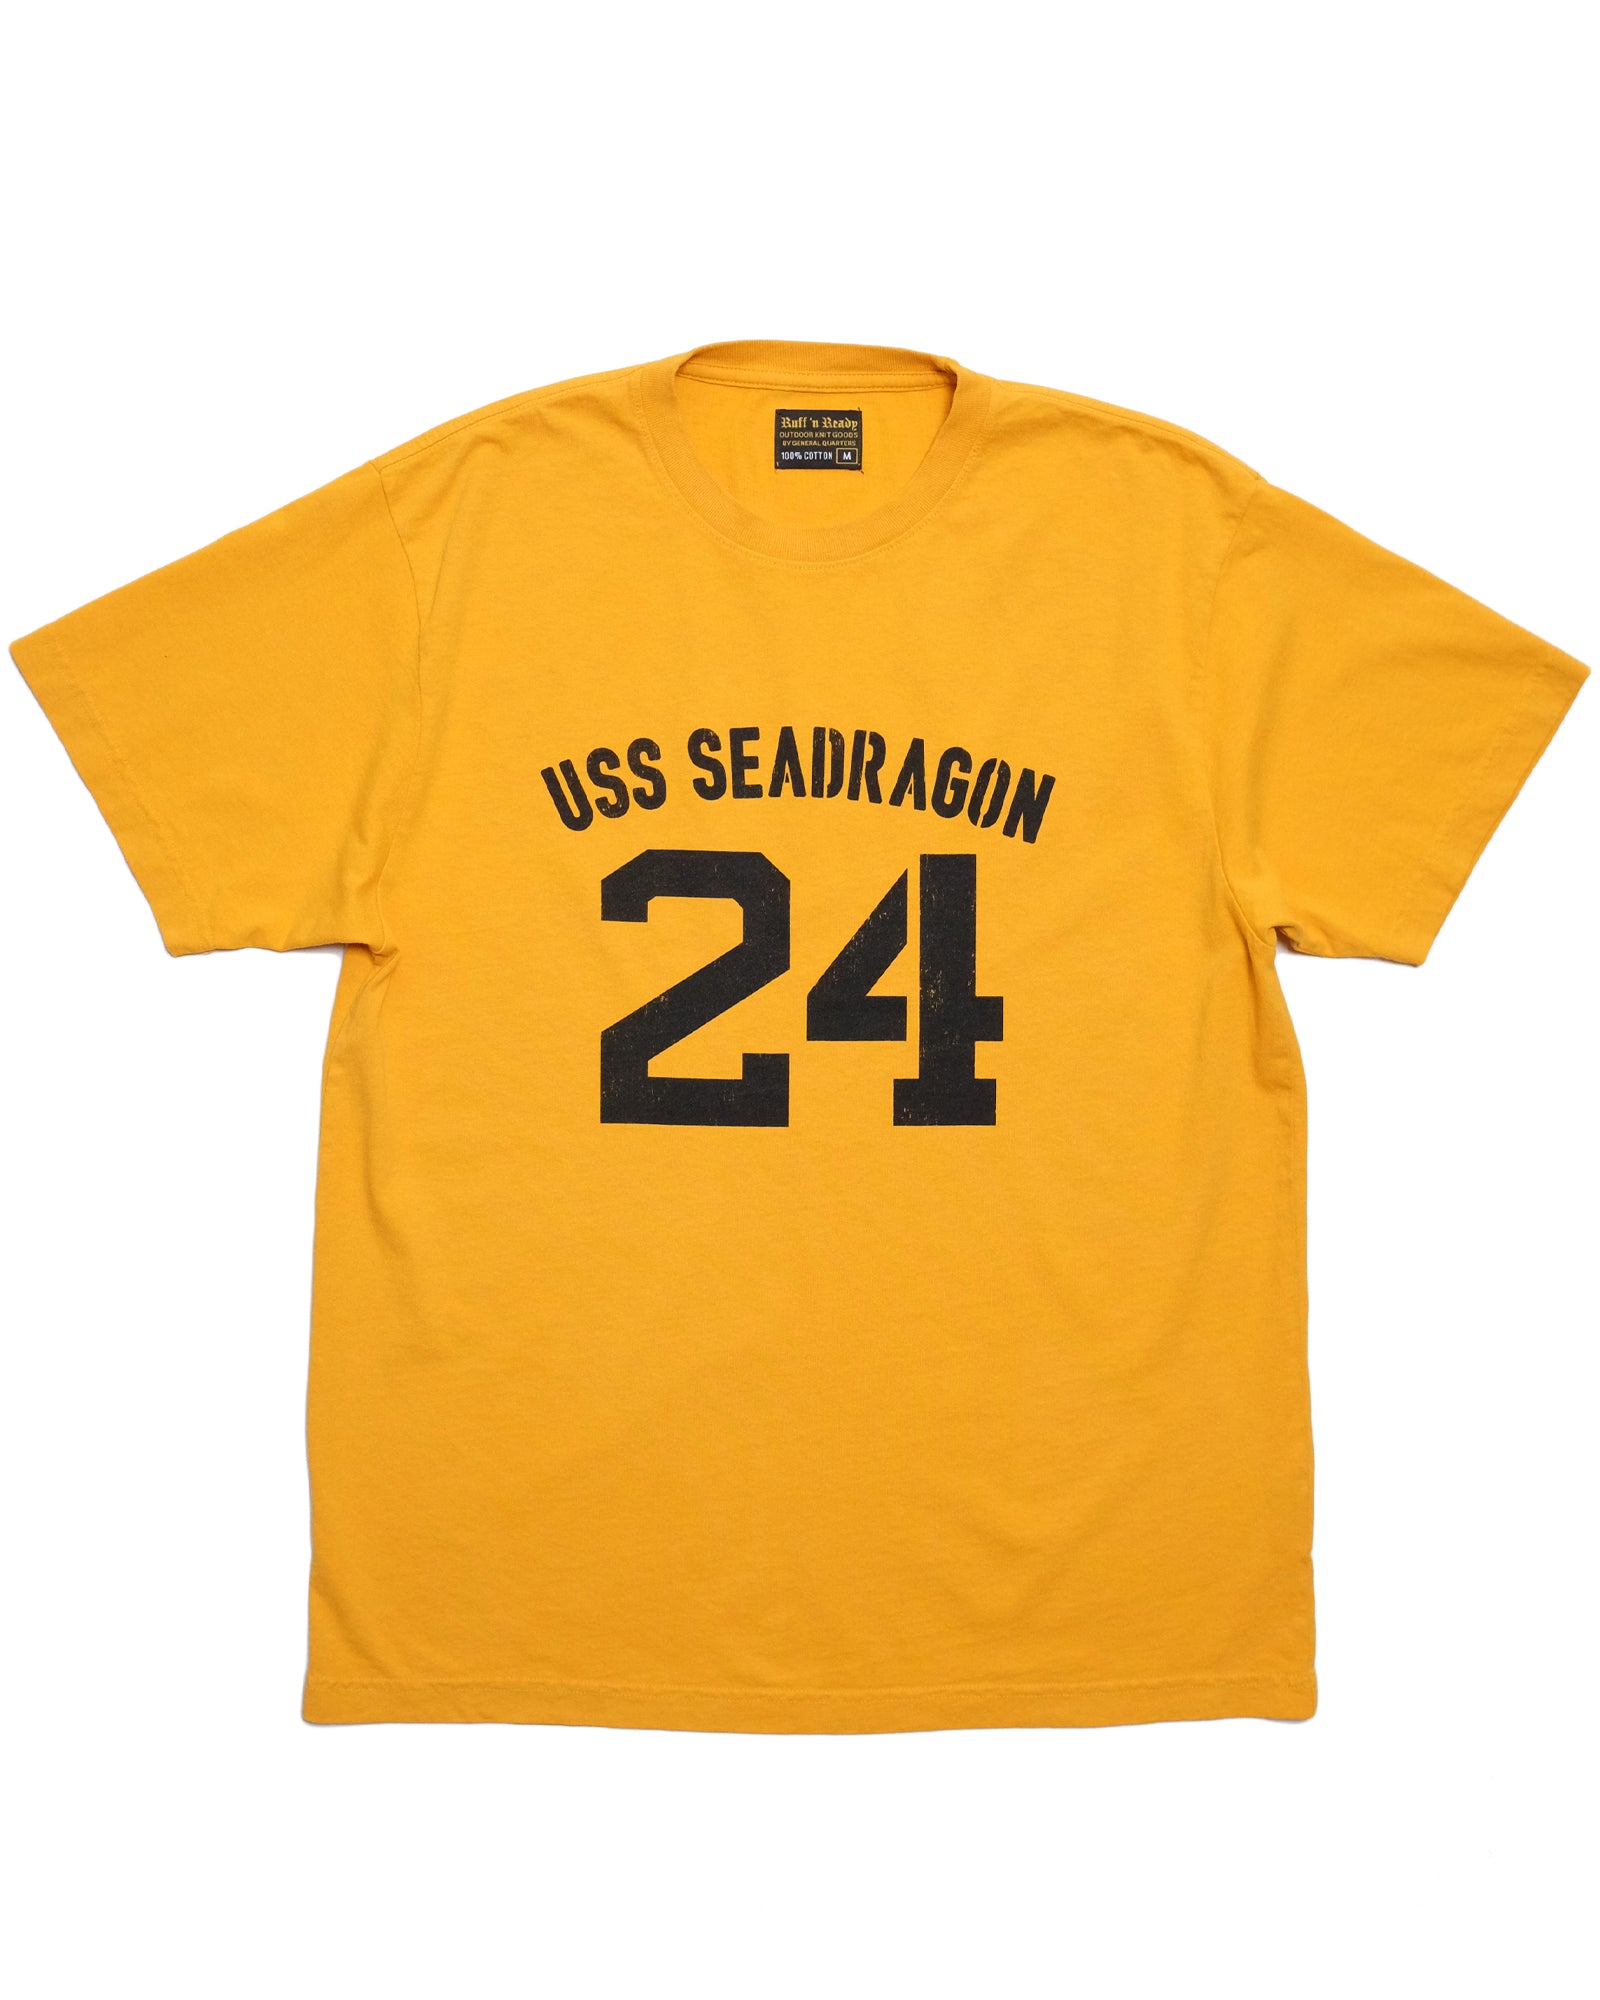 USS Seadragon T-Shirt in Varsity Gold